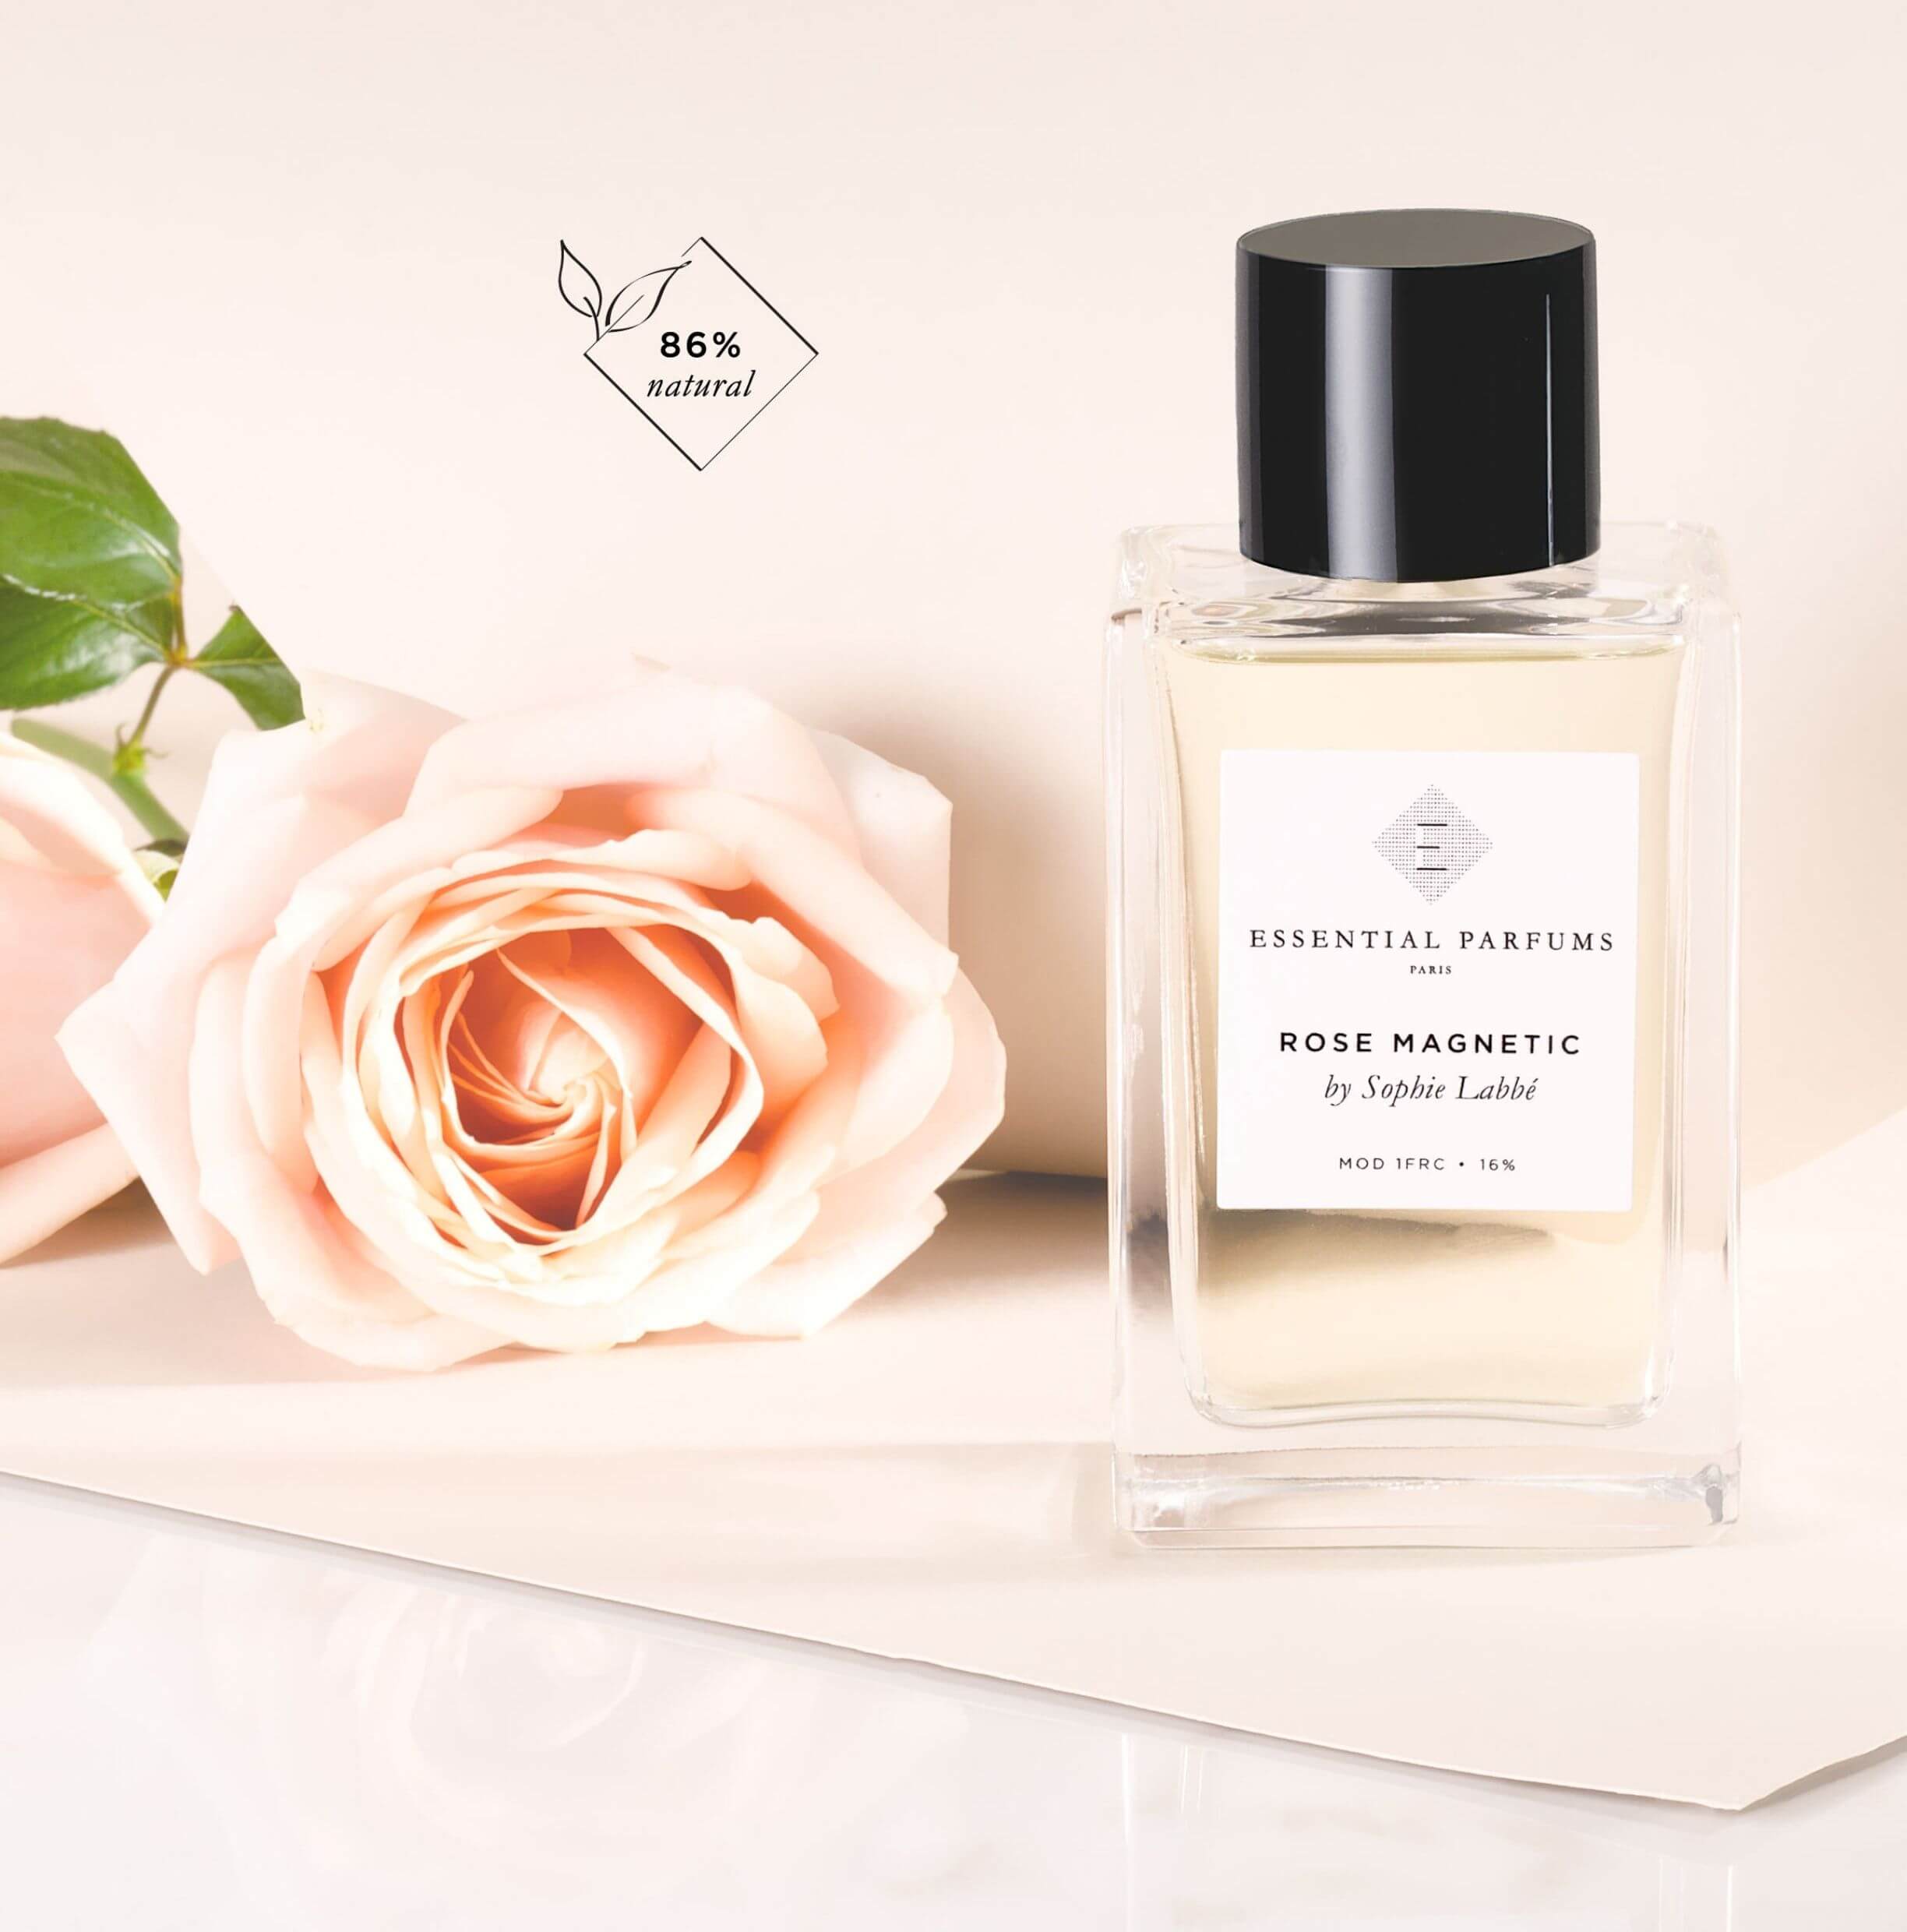 Essential Parfums – Unik by Nature